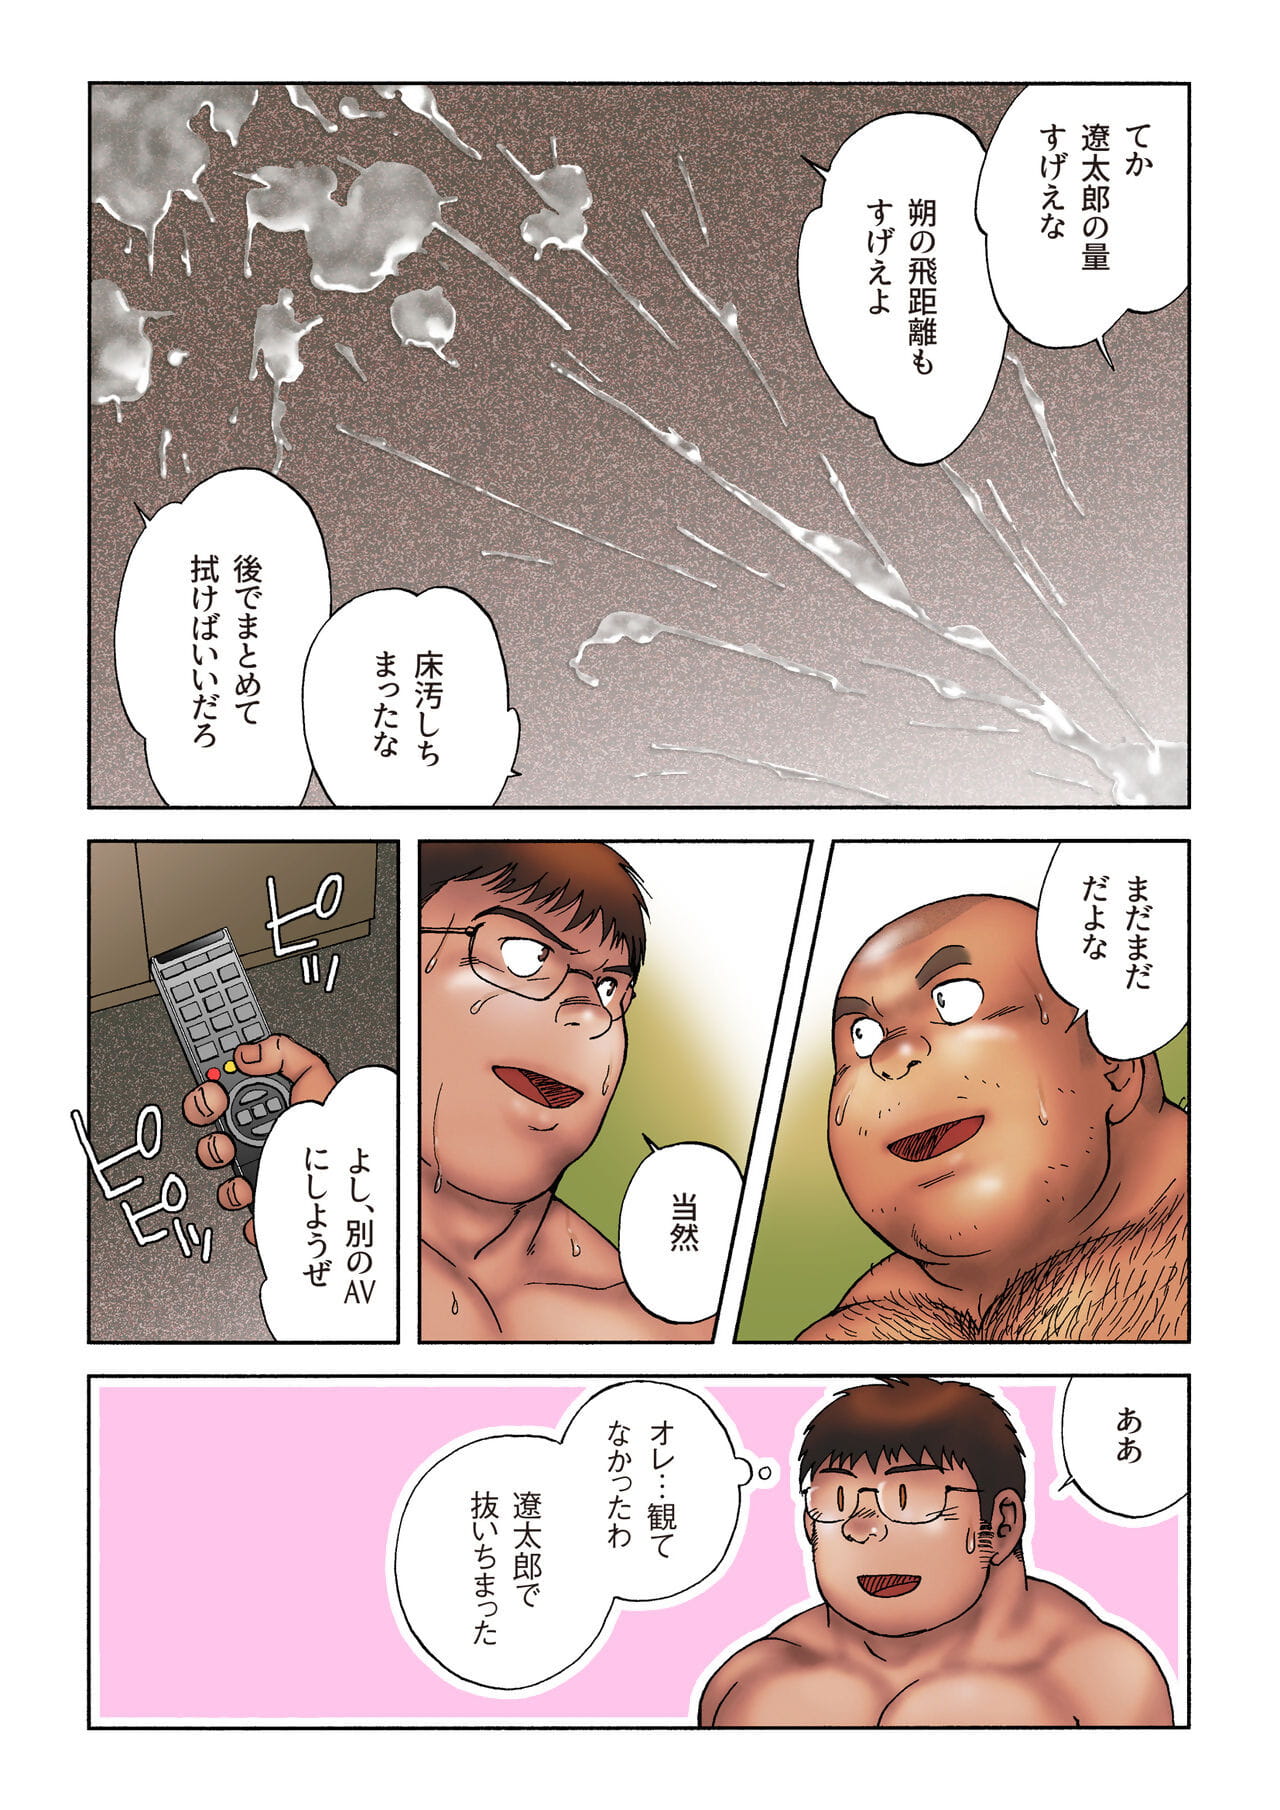 danshi koukousei weightlifter ไท่ไค อไป ไม่ โรงแรม De ไม่ Aoi yoru ส่วนหนึ่ง 2 page 1